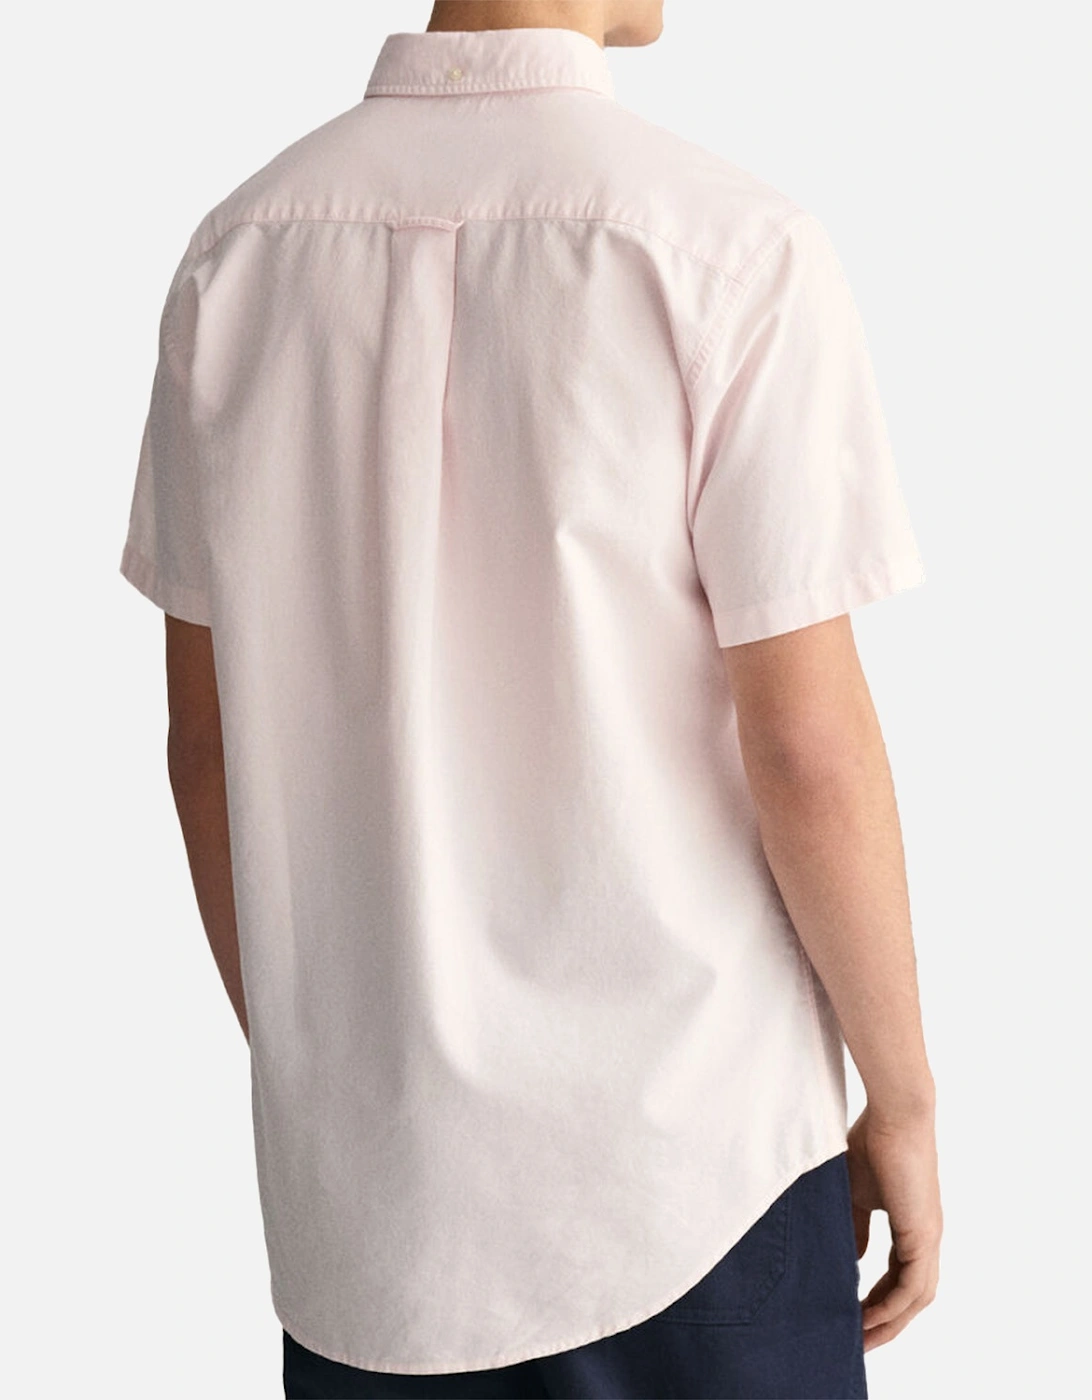 Mens Poplin S/S Shirt (Pink)